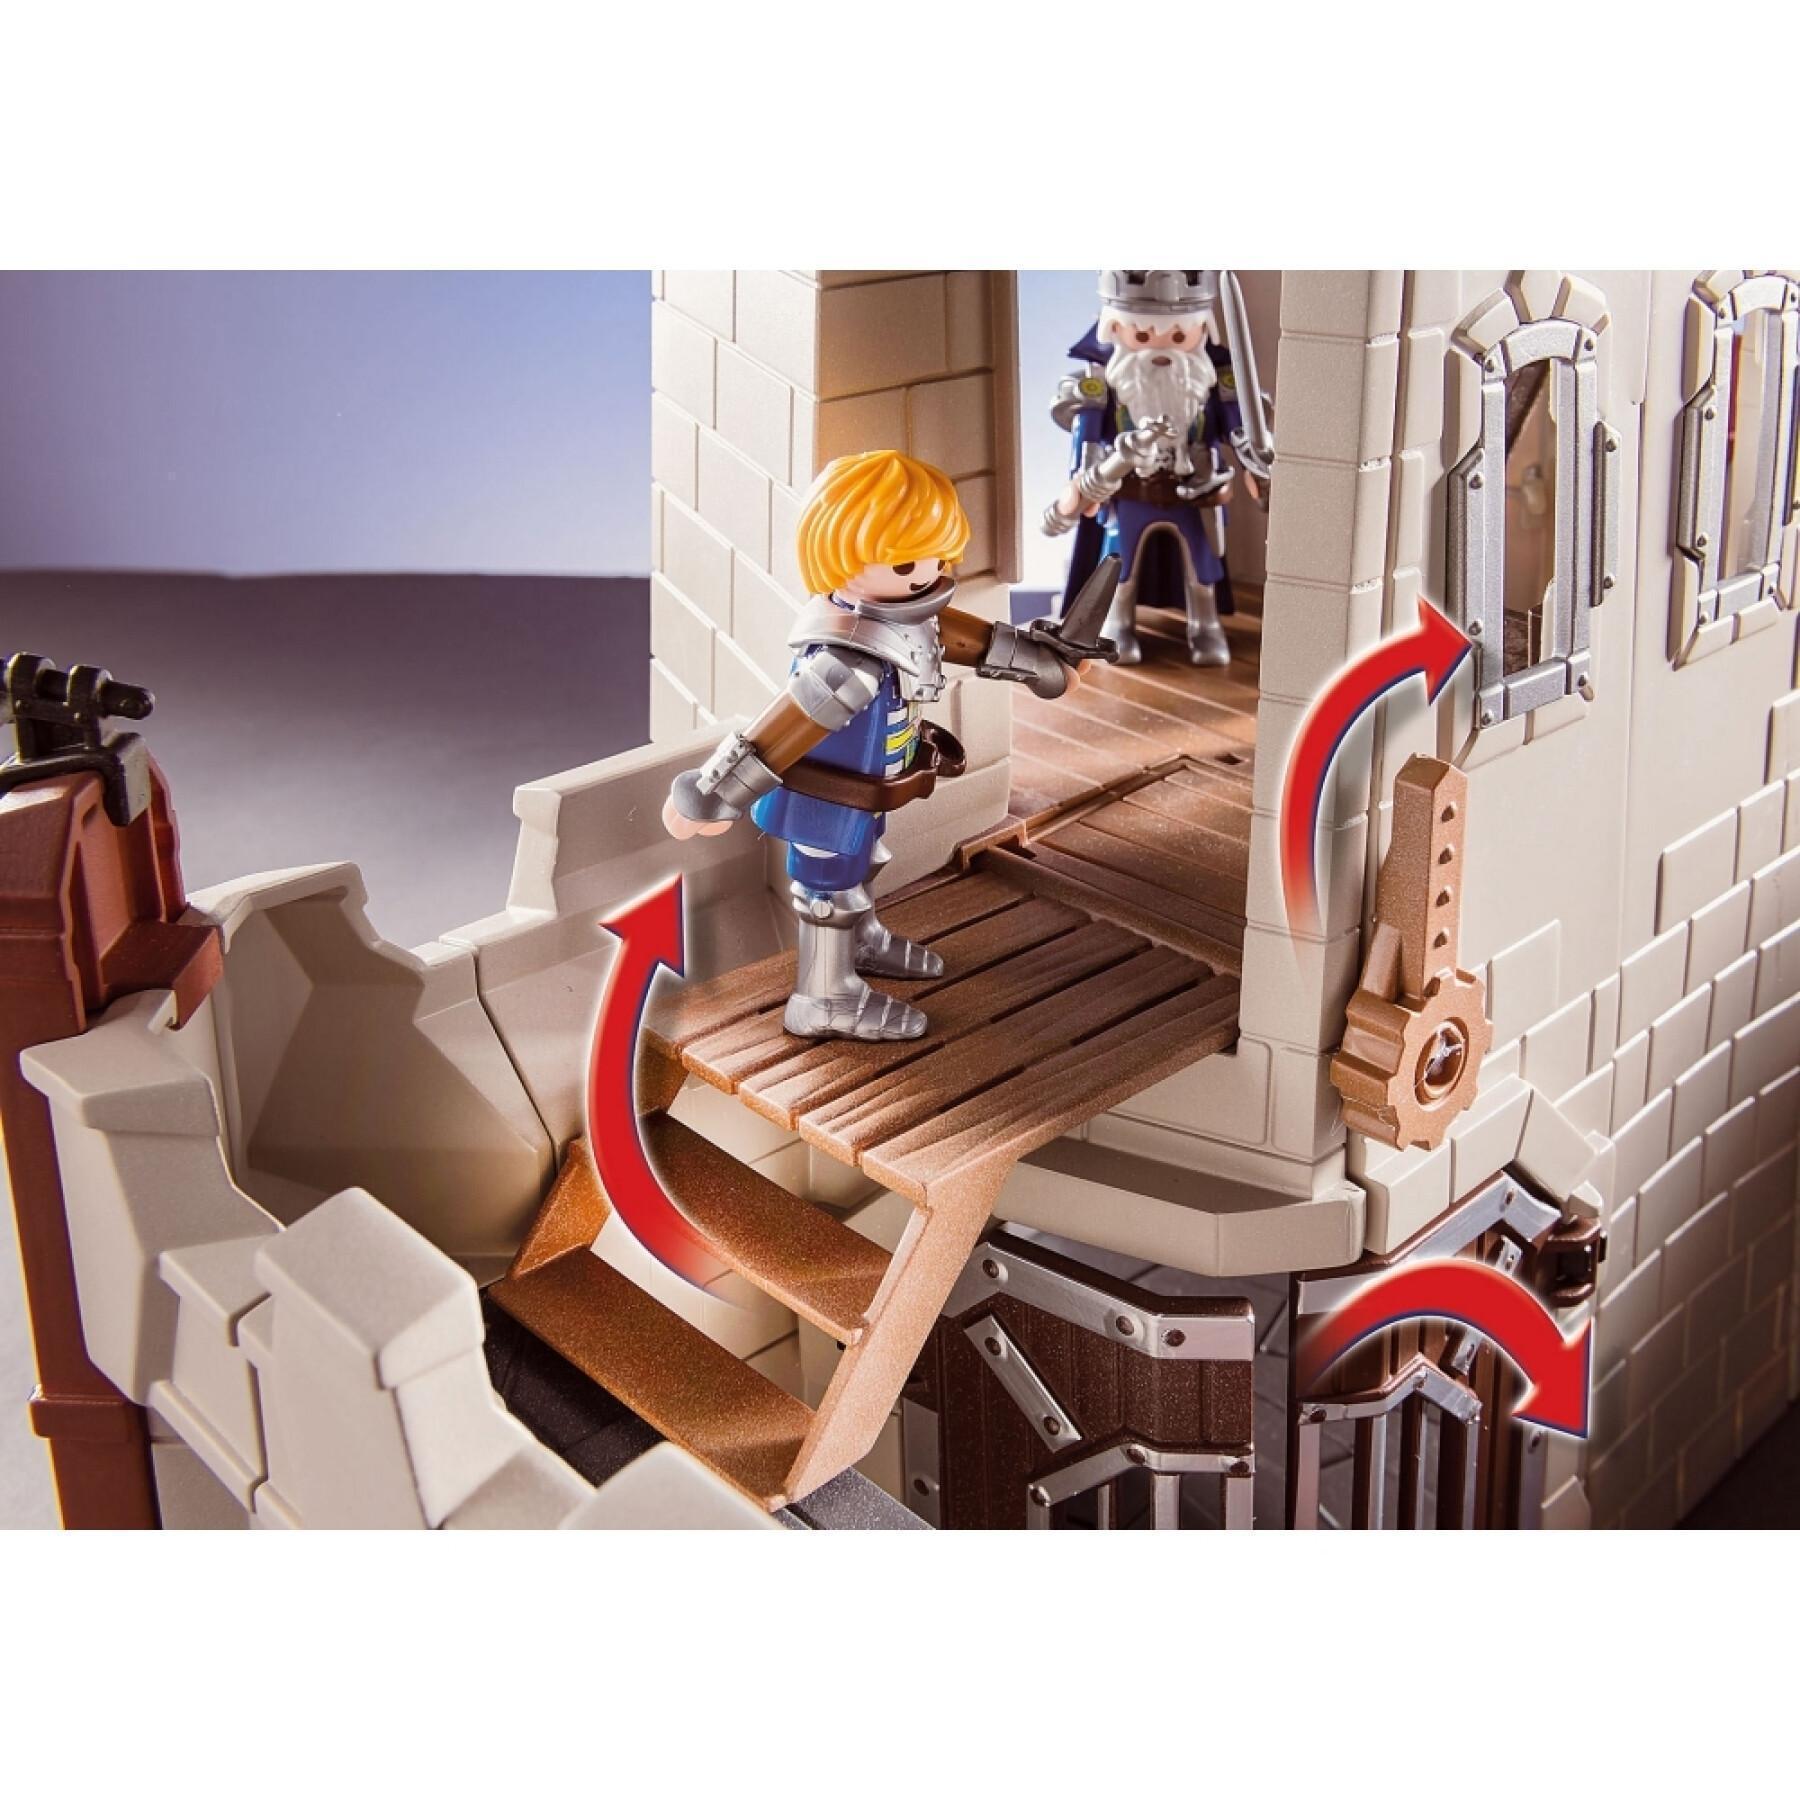 Festung von novelmore Playmobil